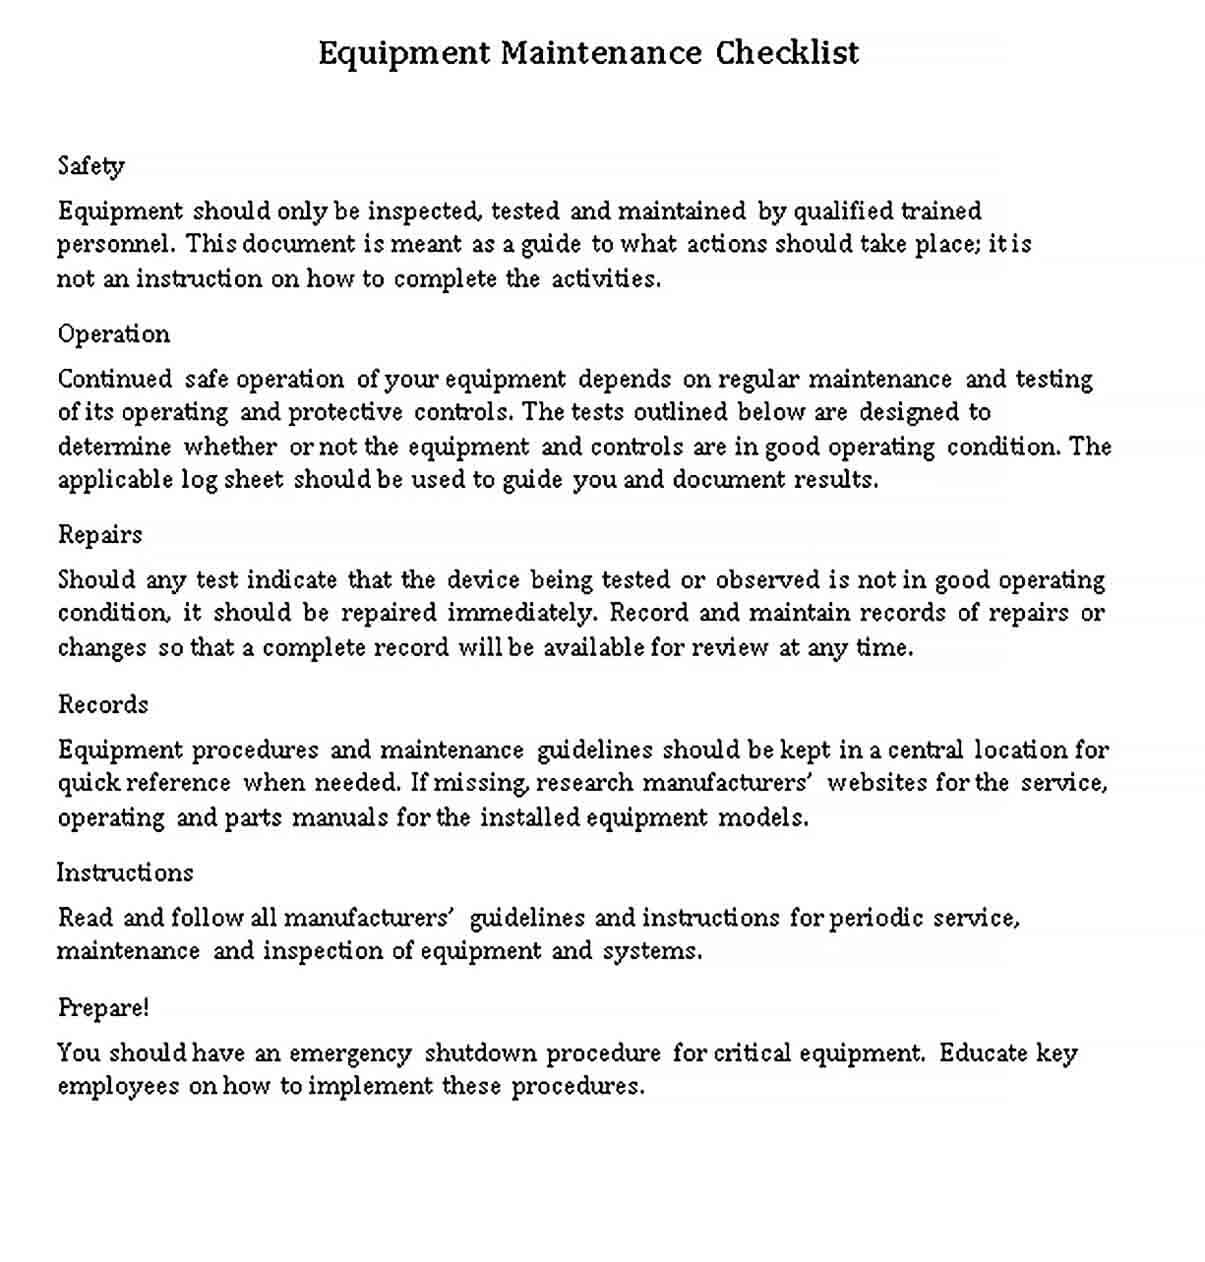 Sample Equipment Maintenance Checklist Template